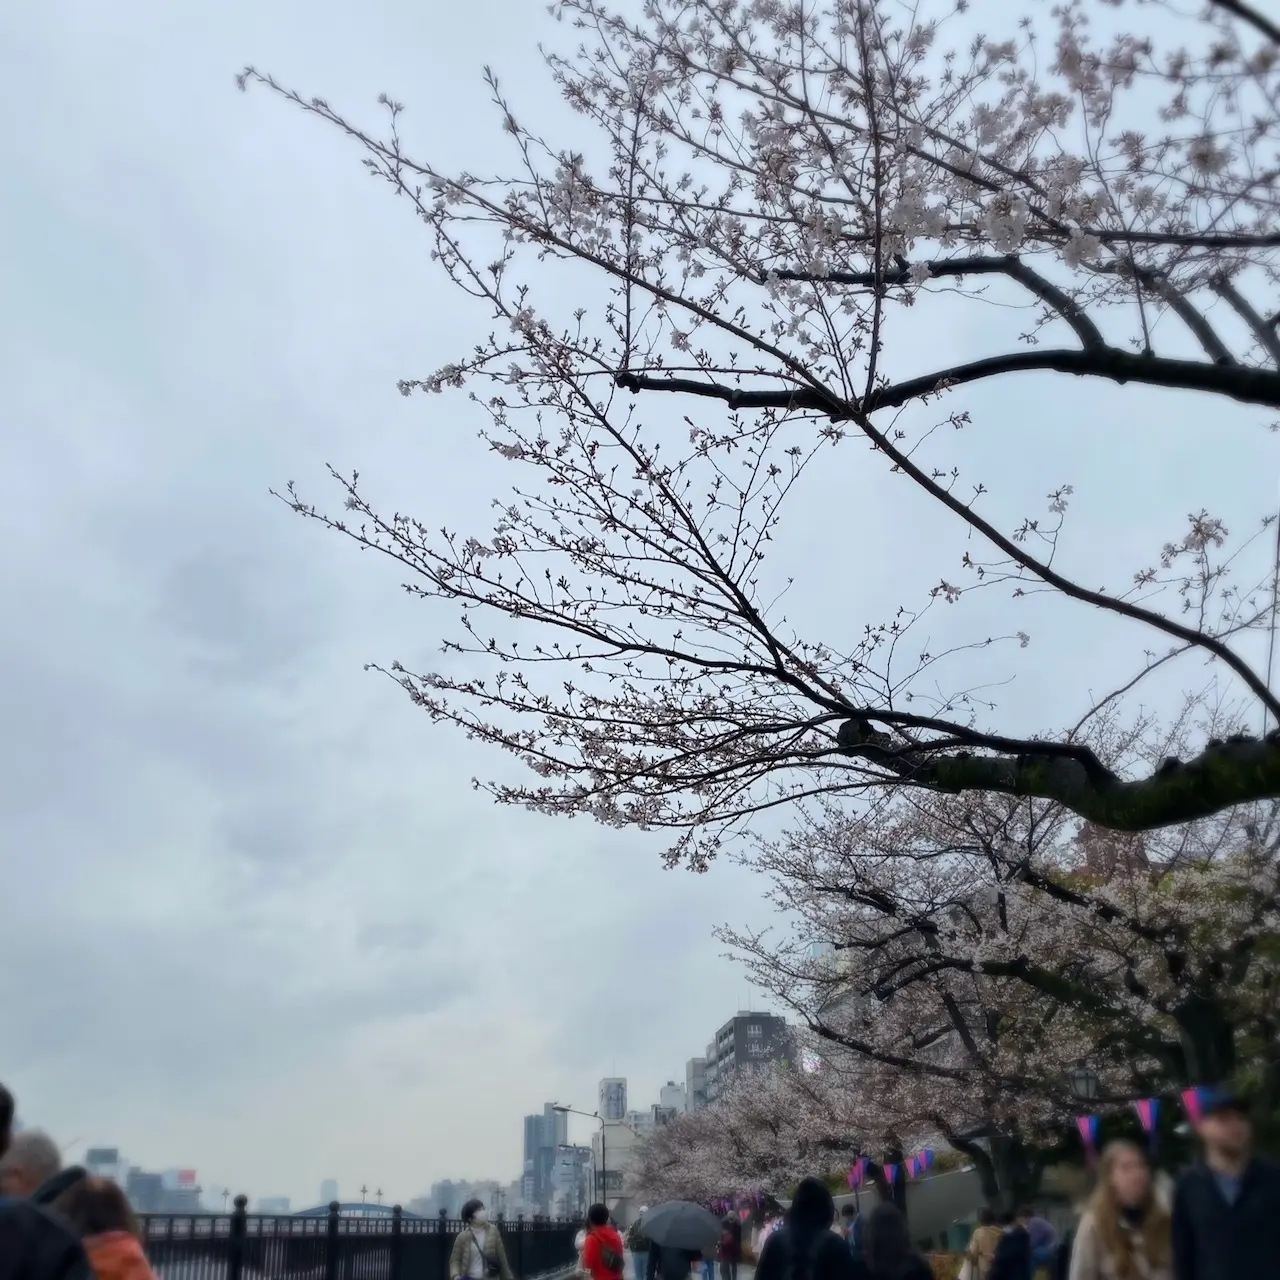 隅田川の桜並木